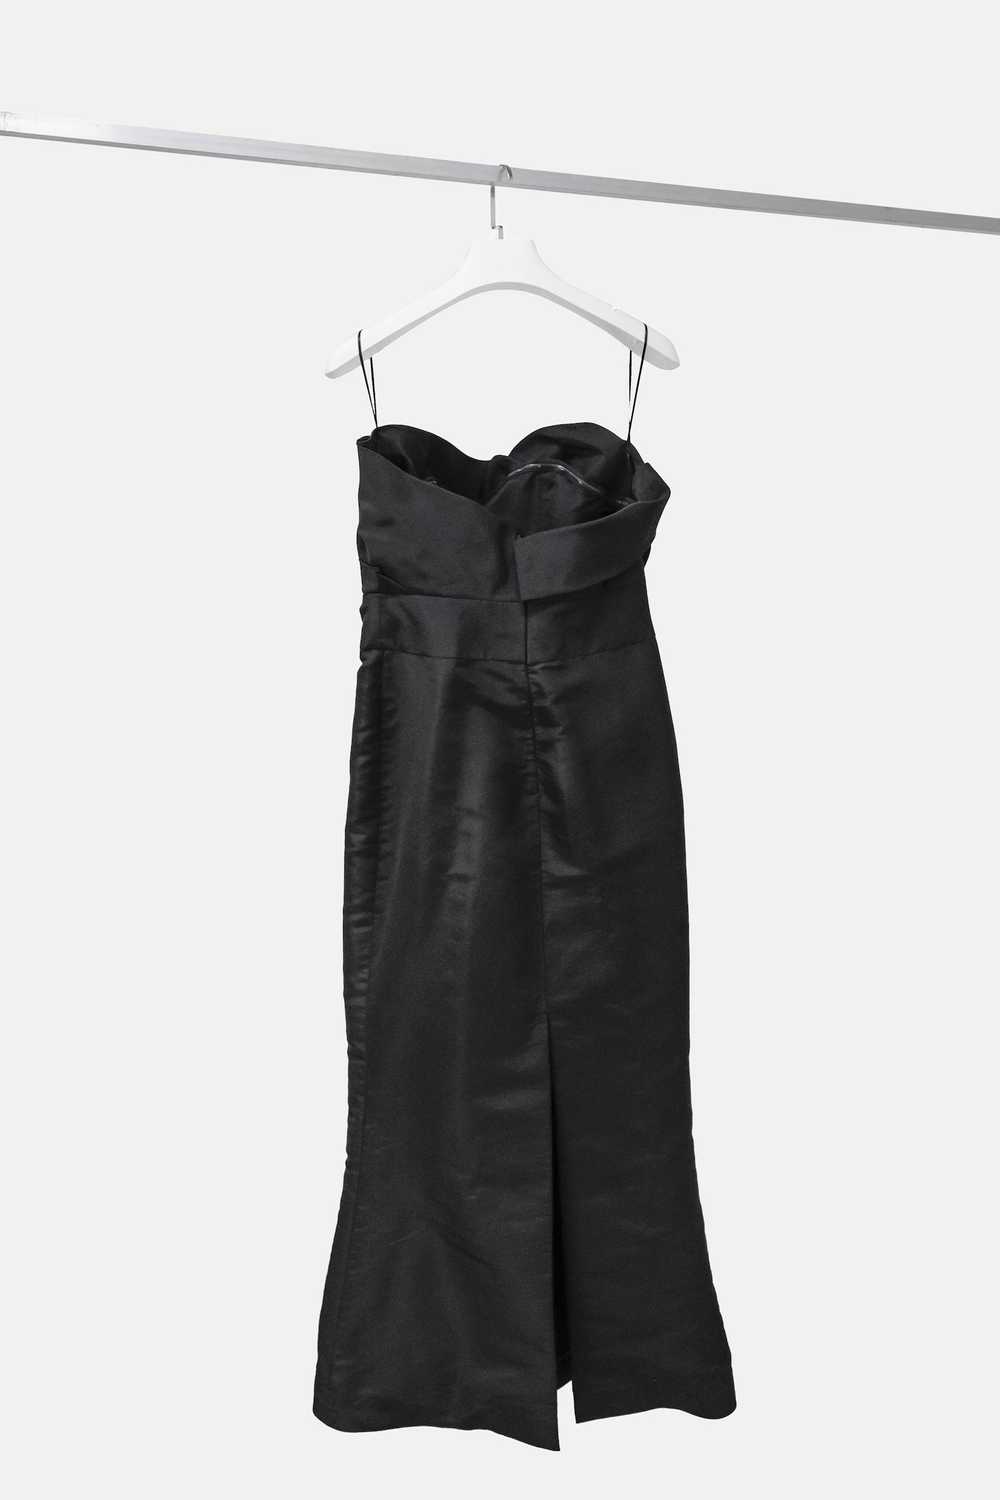 Designer Jacques Fath Black Silk Gown - image 2